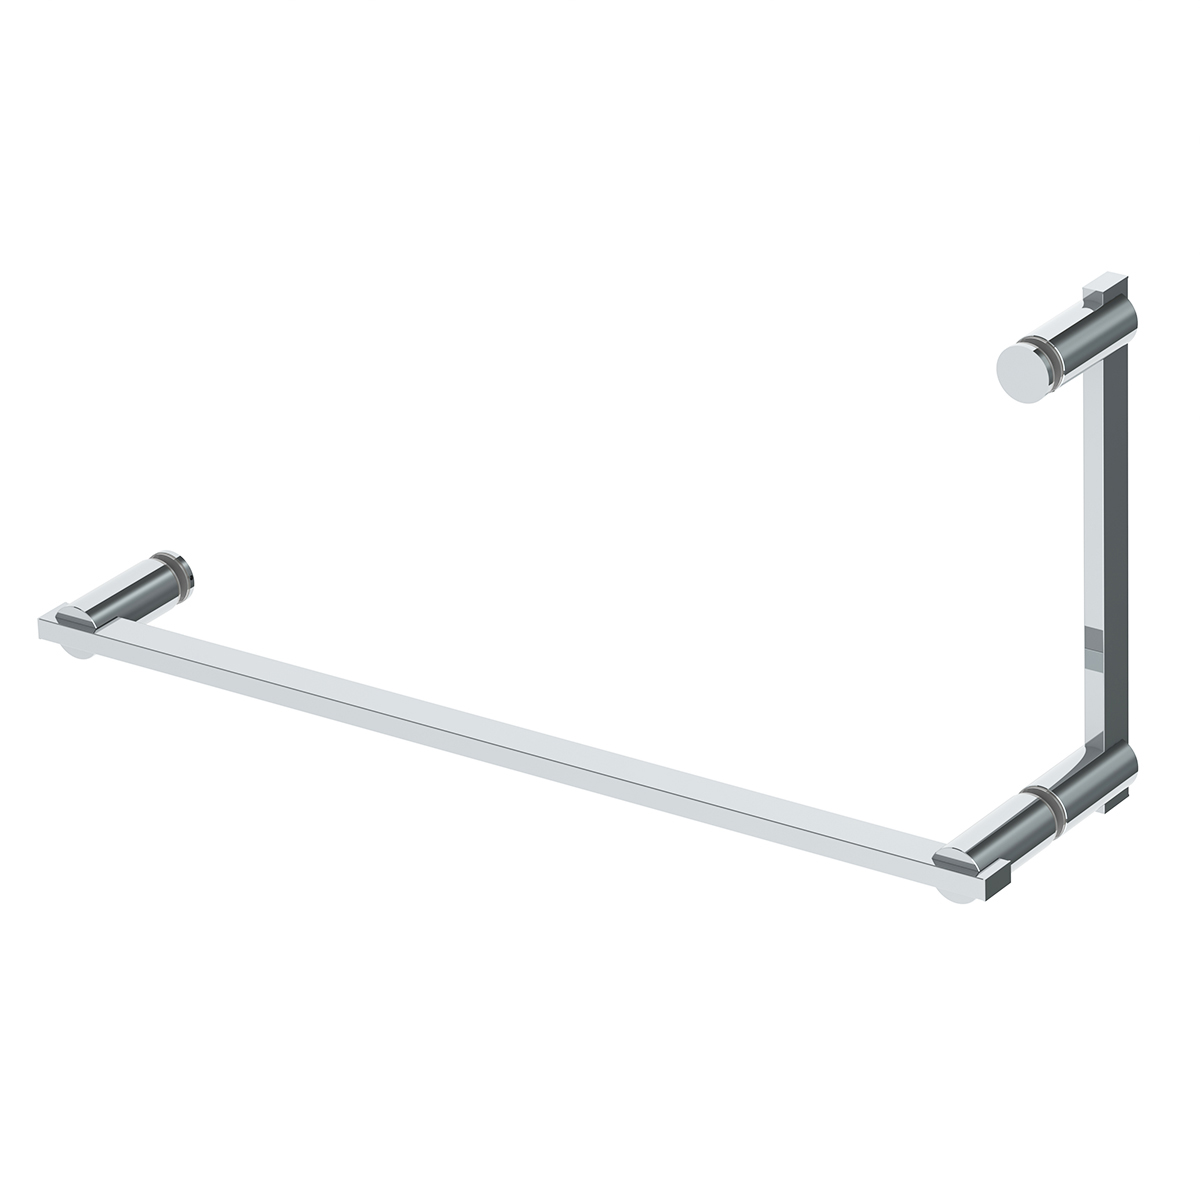 Arc Offset Shower Door Handle And Towel Bar Combination 10-218X18PC 8 x 18 -LR (2)